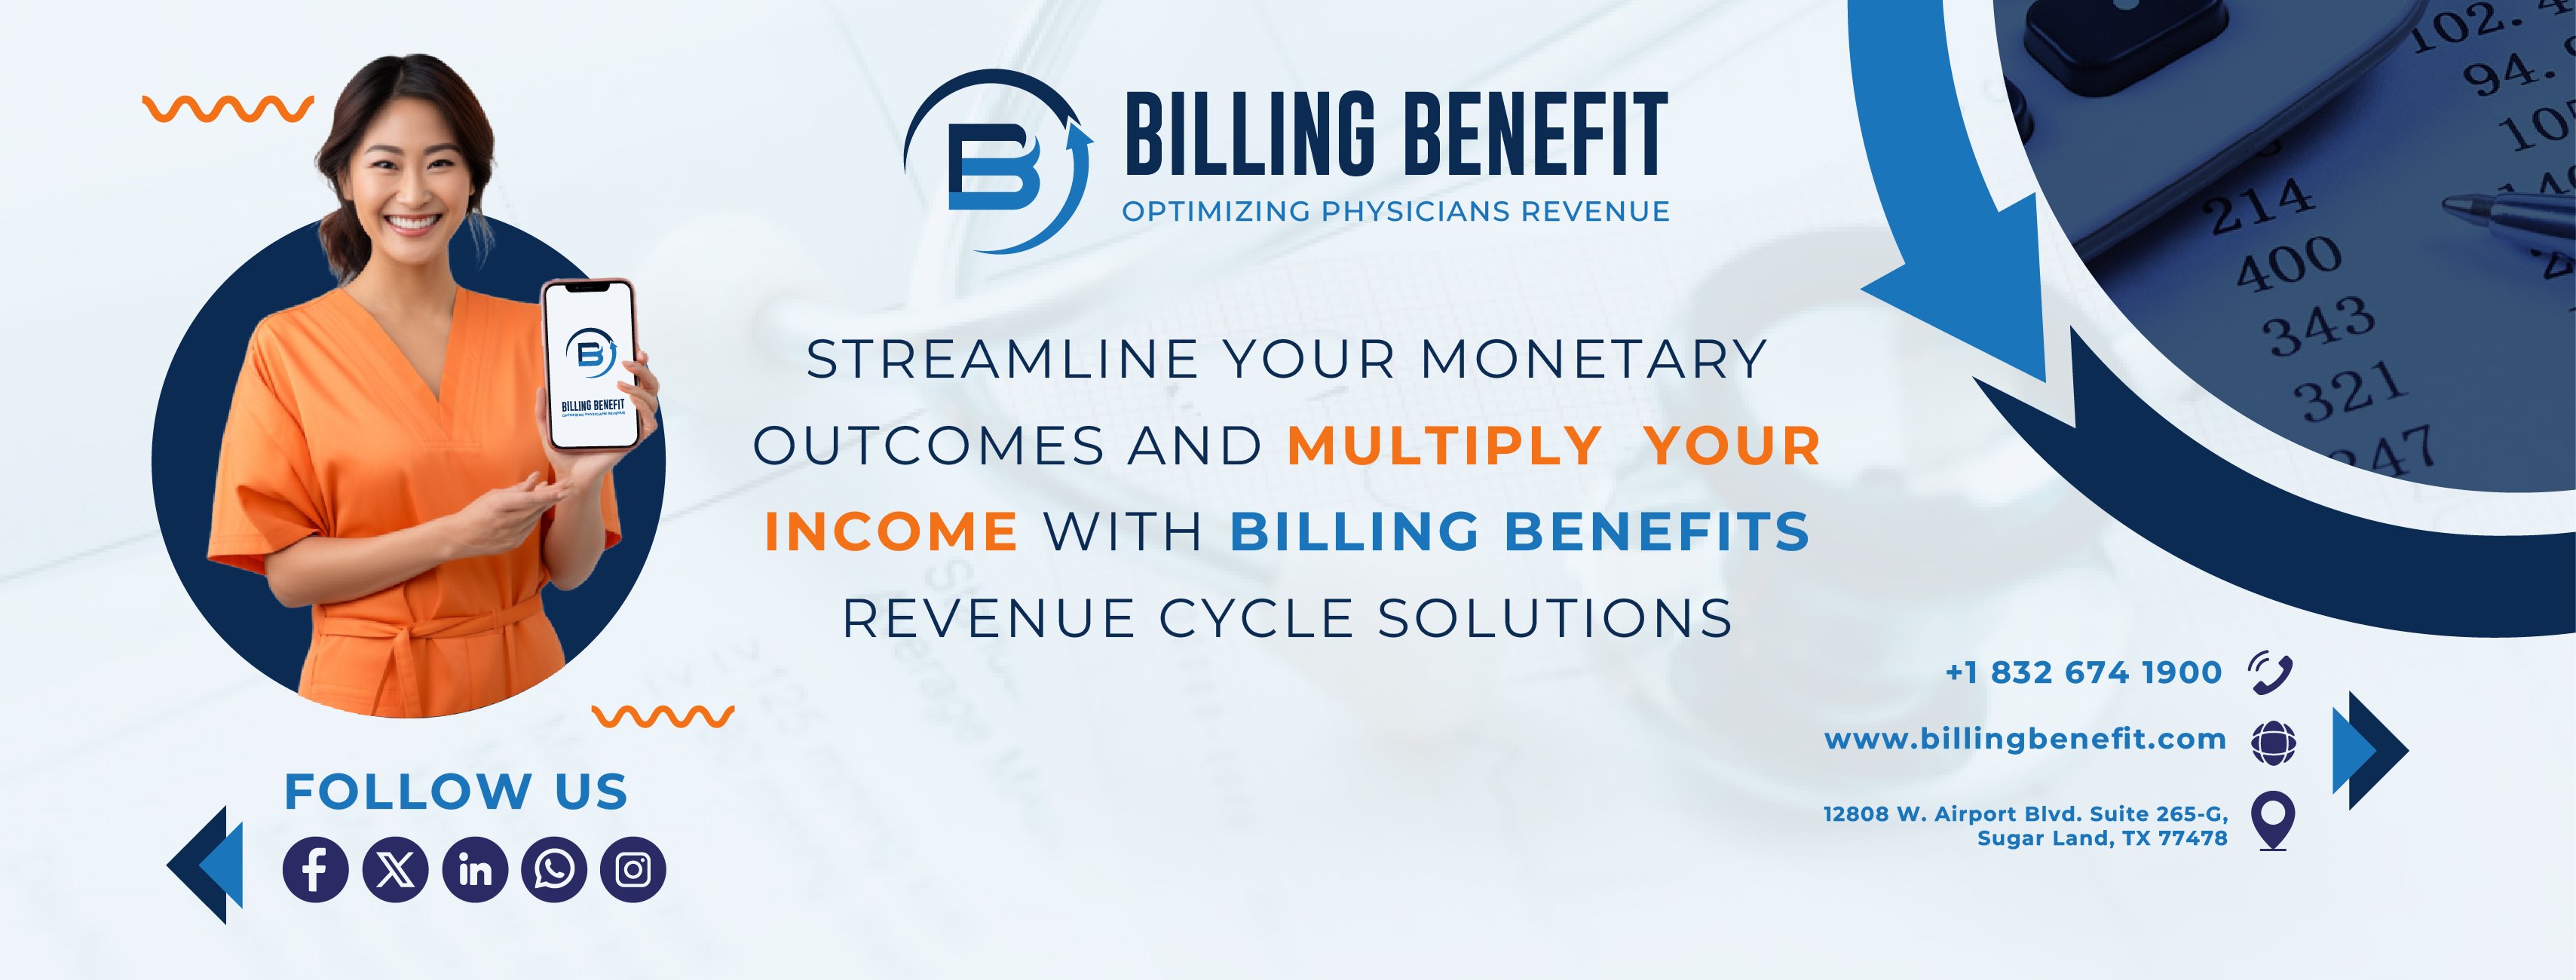 Billing Benefit cover